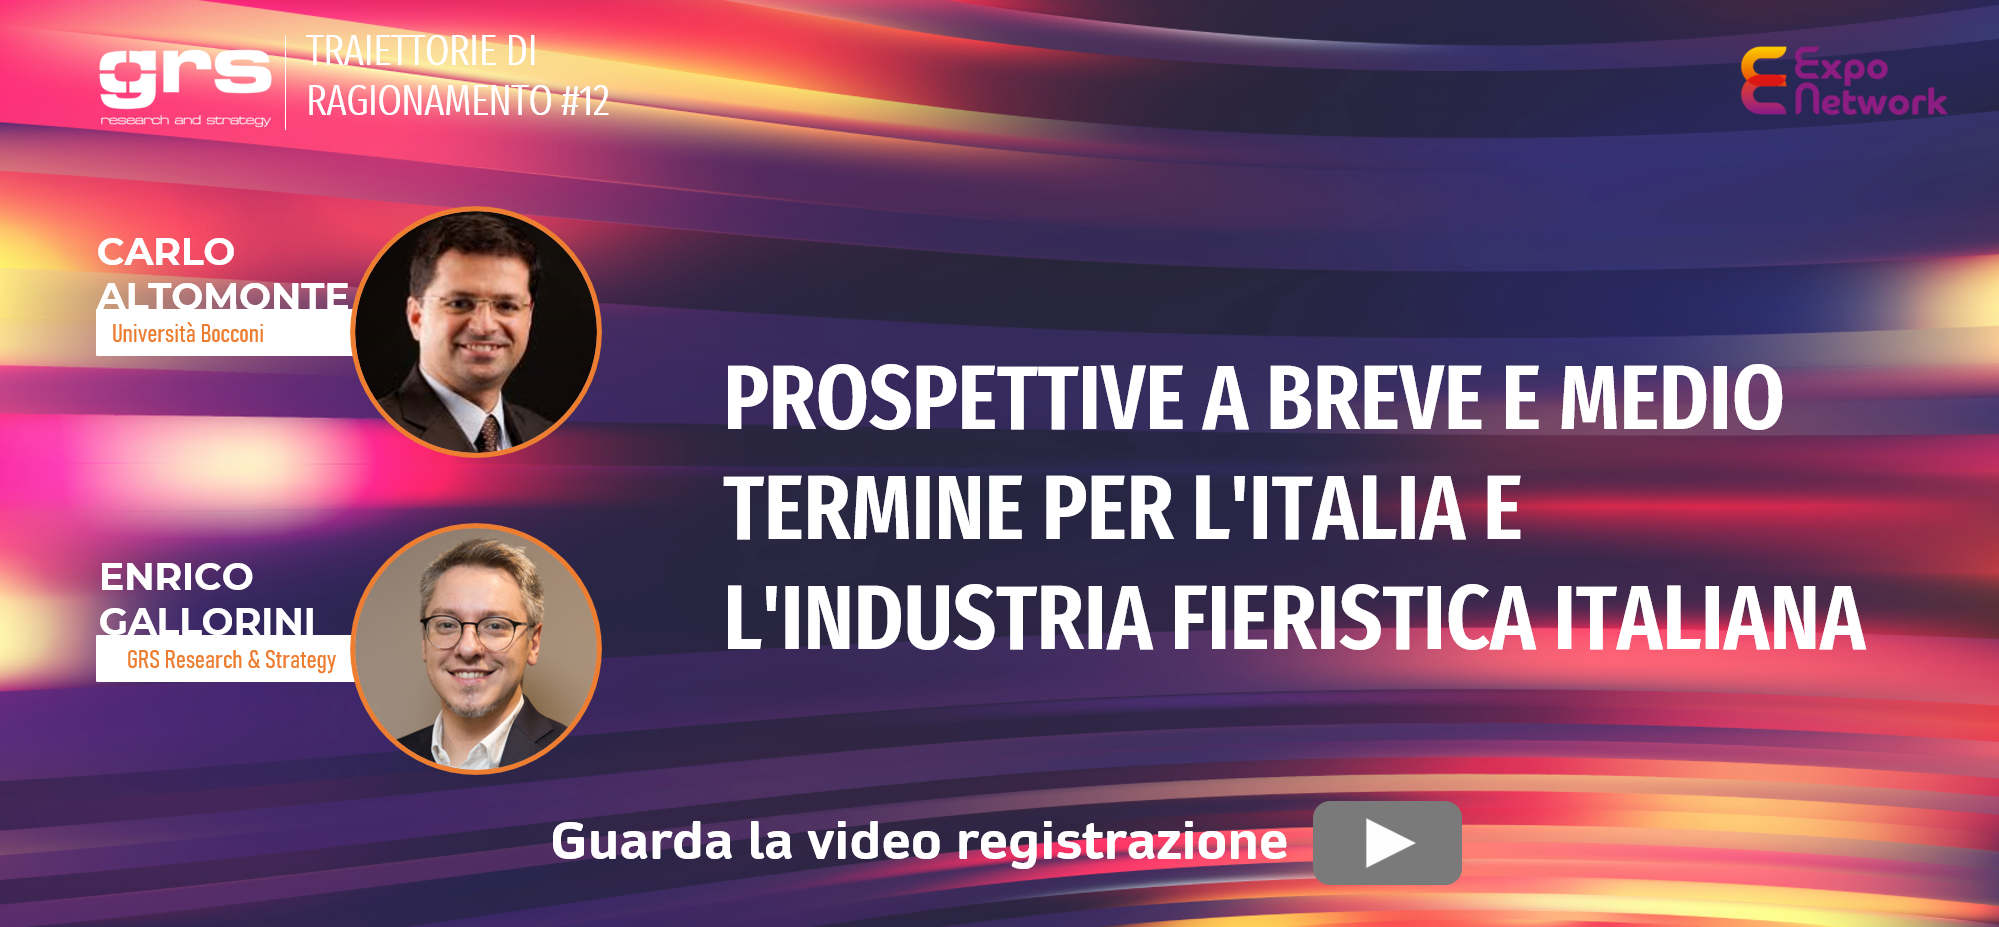 web-meeting-12-prospettive-a-breve-e-medio-termine-per-litalia-e-lindustria-fieristica-italiana